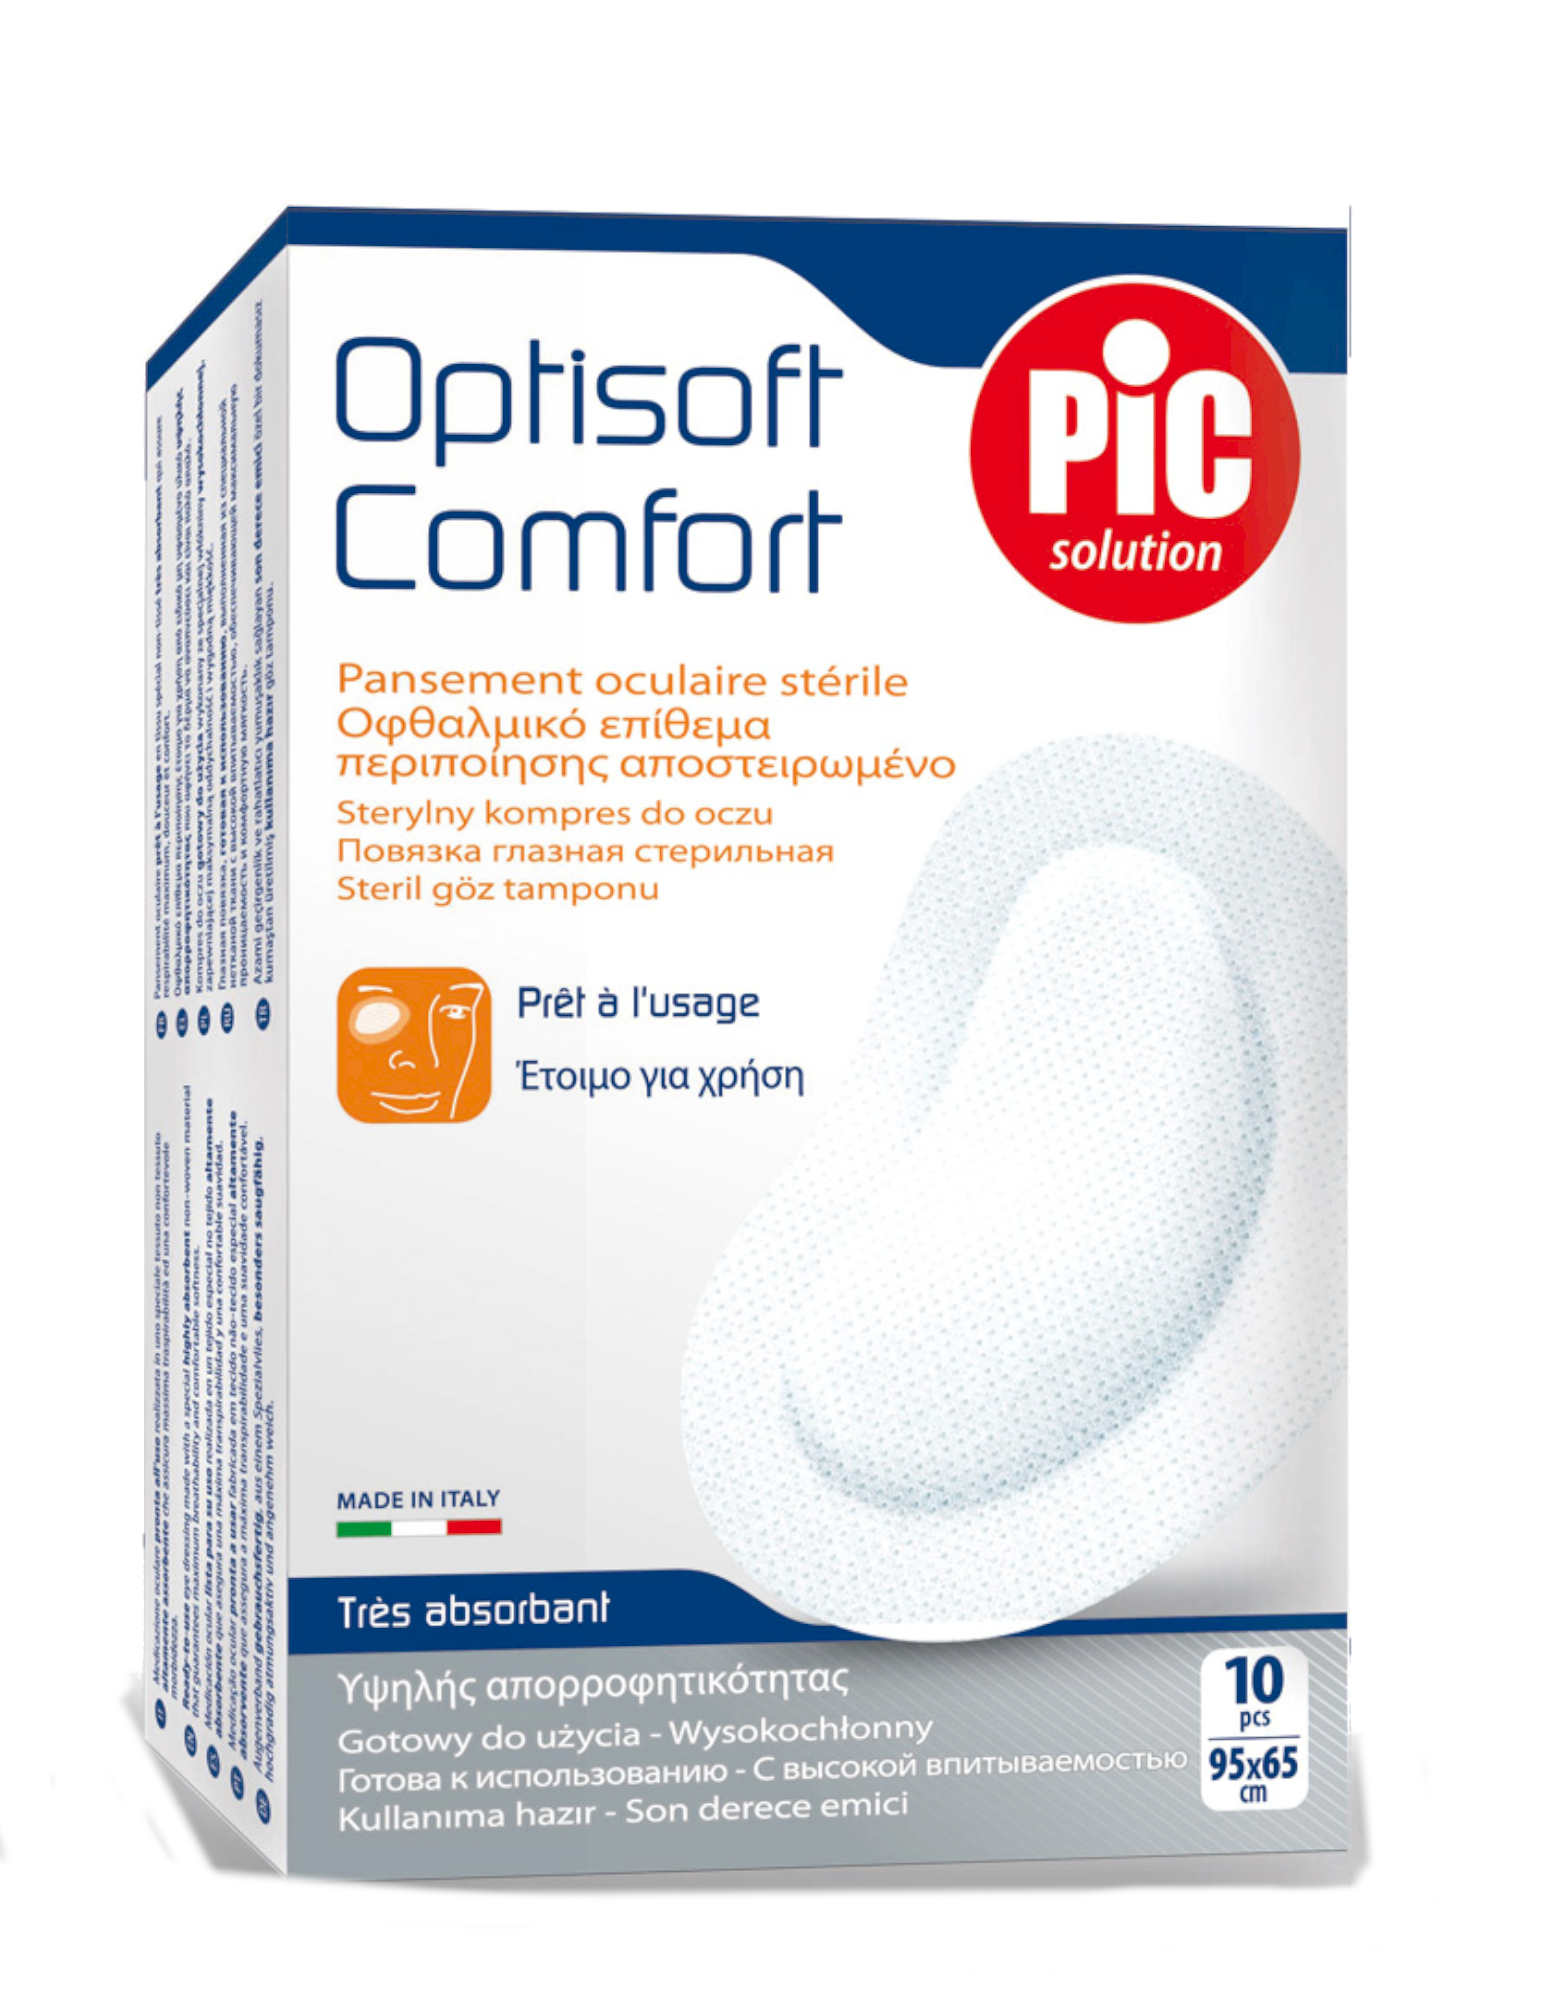 PIC Optisoft Comfort Medicazione Oculare Sterile 10 Pcs 96x65mm